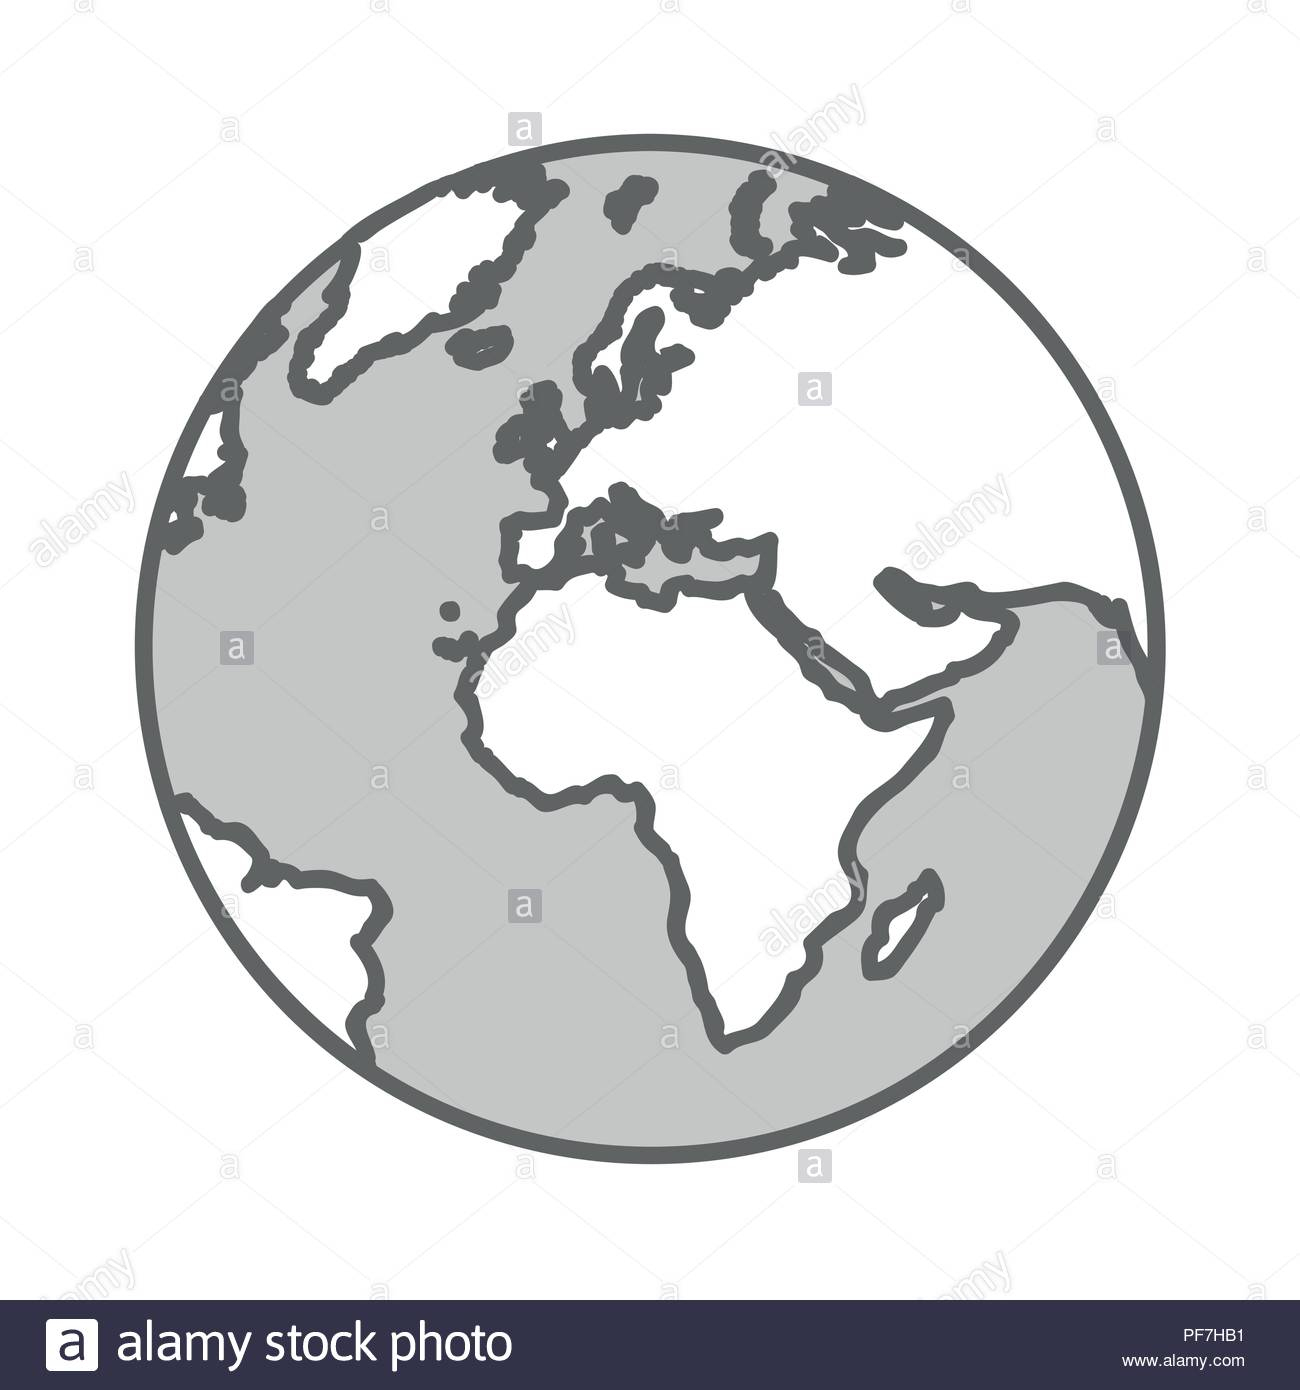 Globe Terrestre De La Terre Gris Dessin Simple Vector serapportantà Image De La Terre Dessin